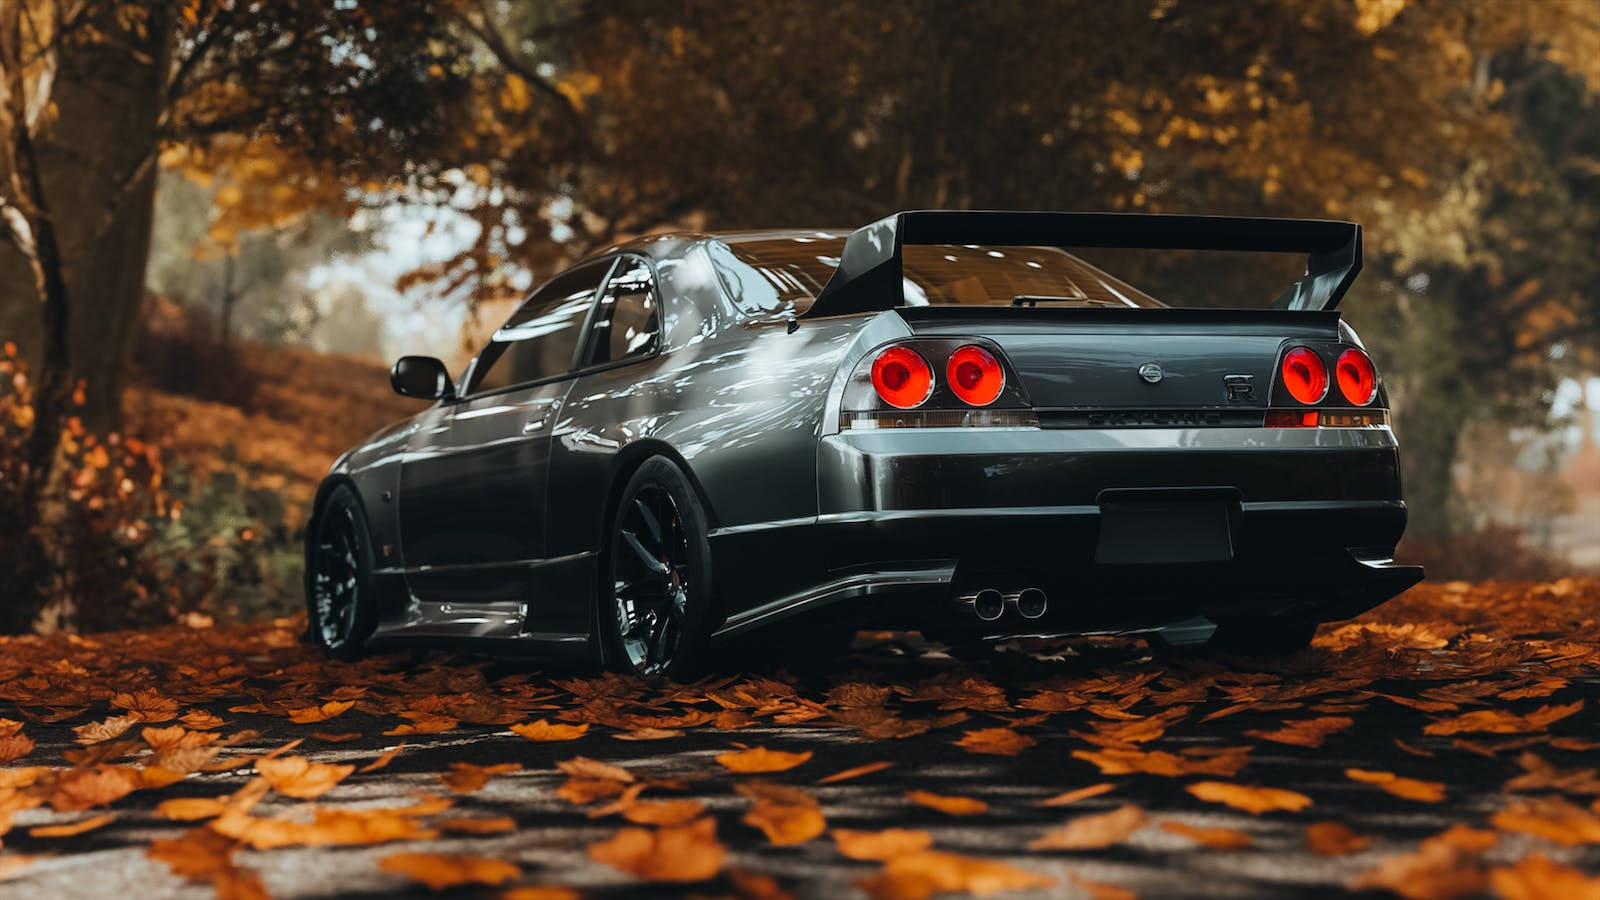 Gray Skyline Car In Autumn